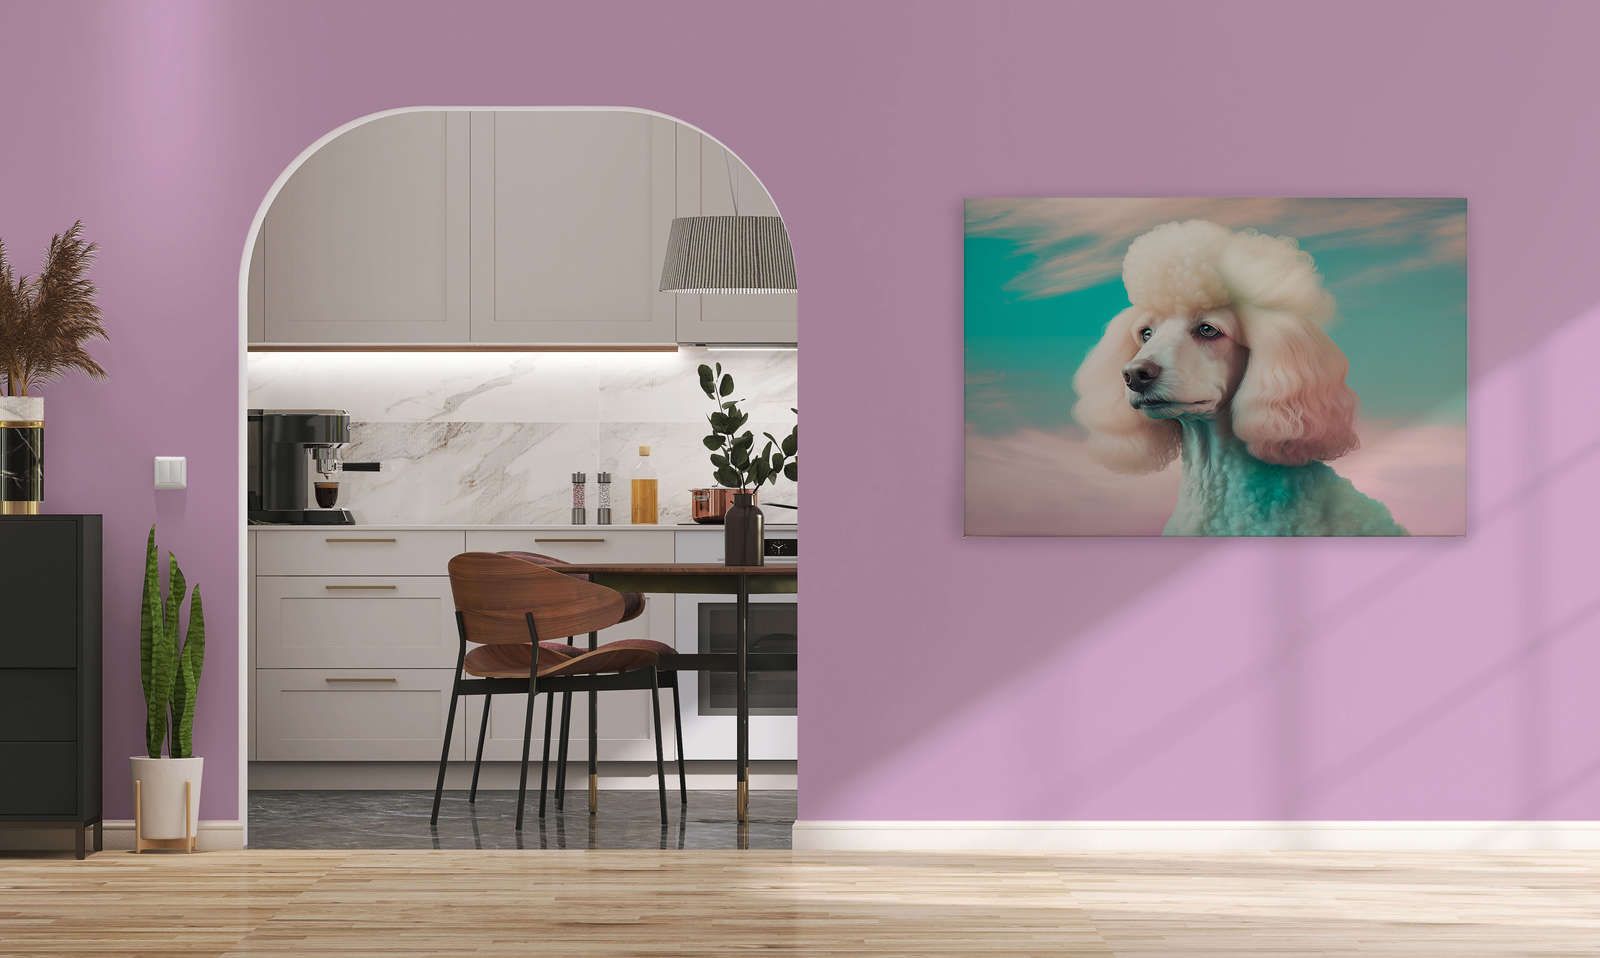             KI Canvas schilderij »rainbow dog« - 120 cm x 80 cm
        